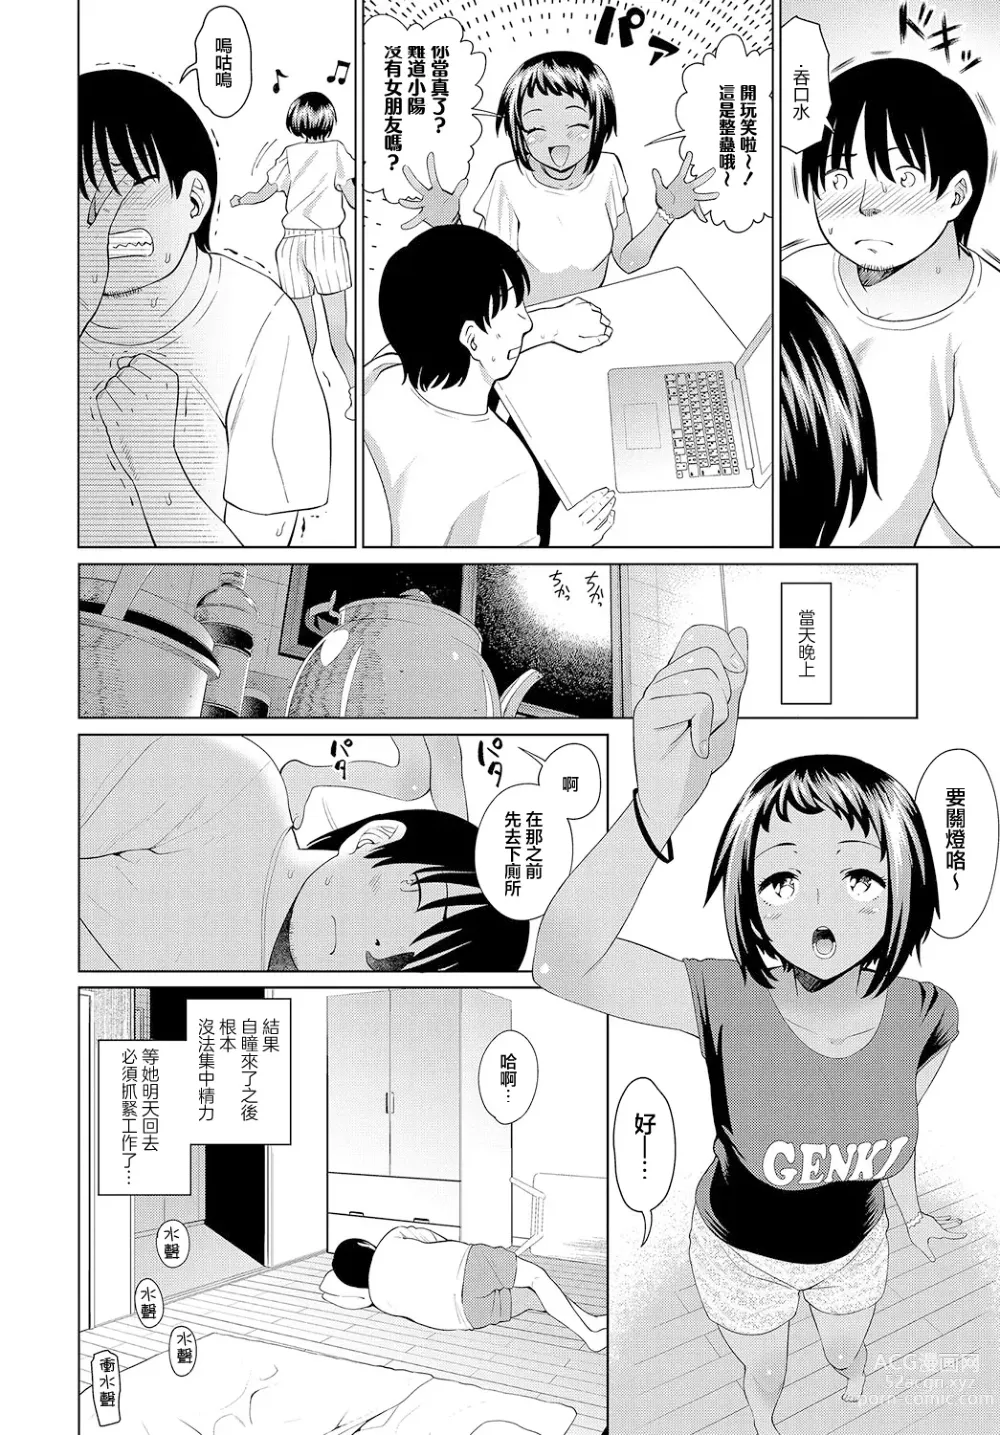 Page 4 of manga Mei no Natsuyasumi